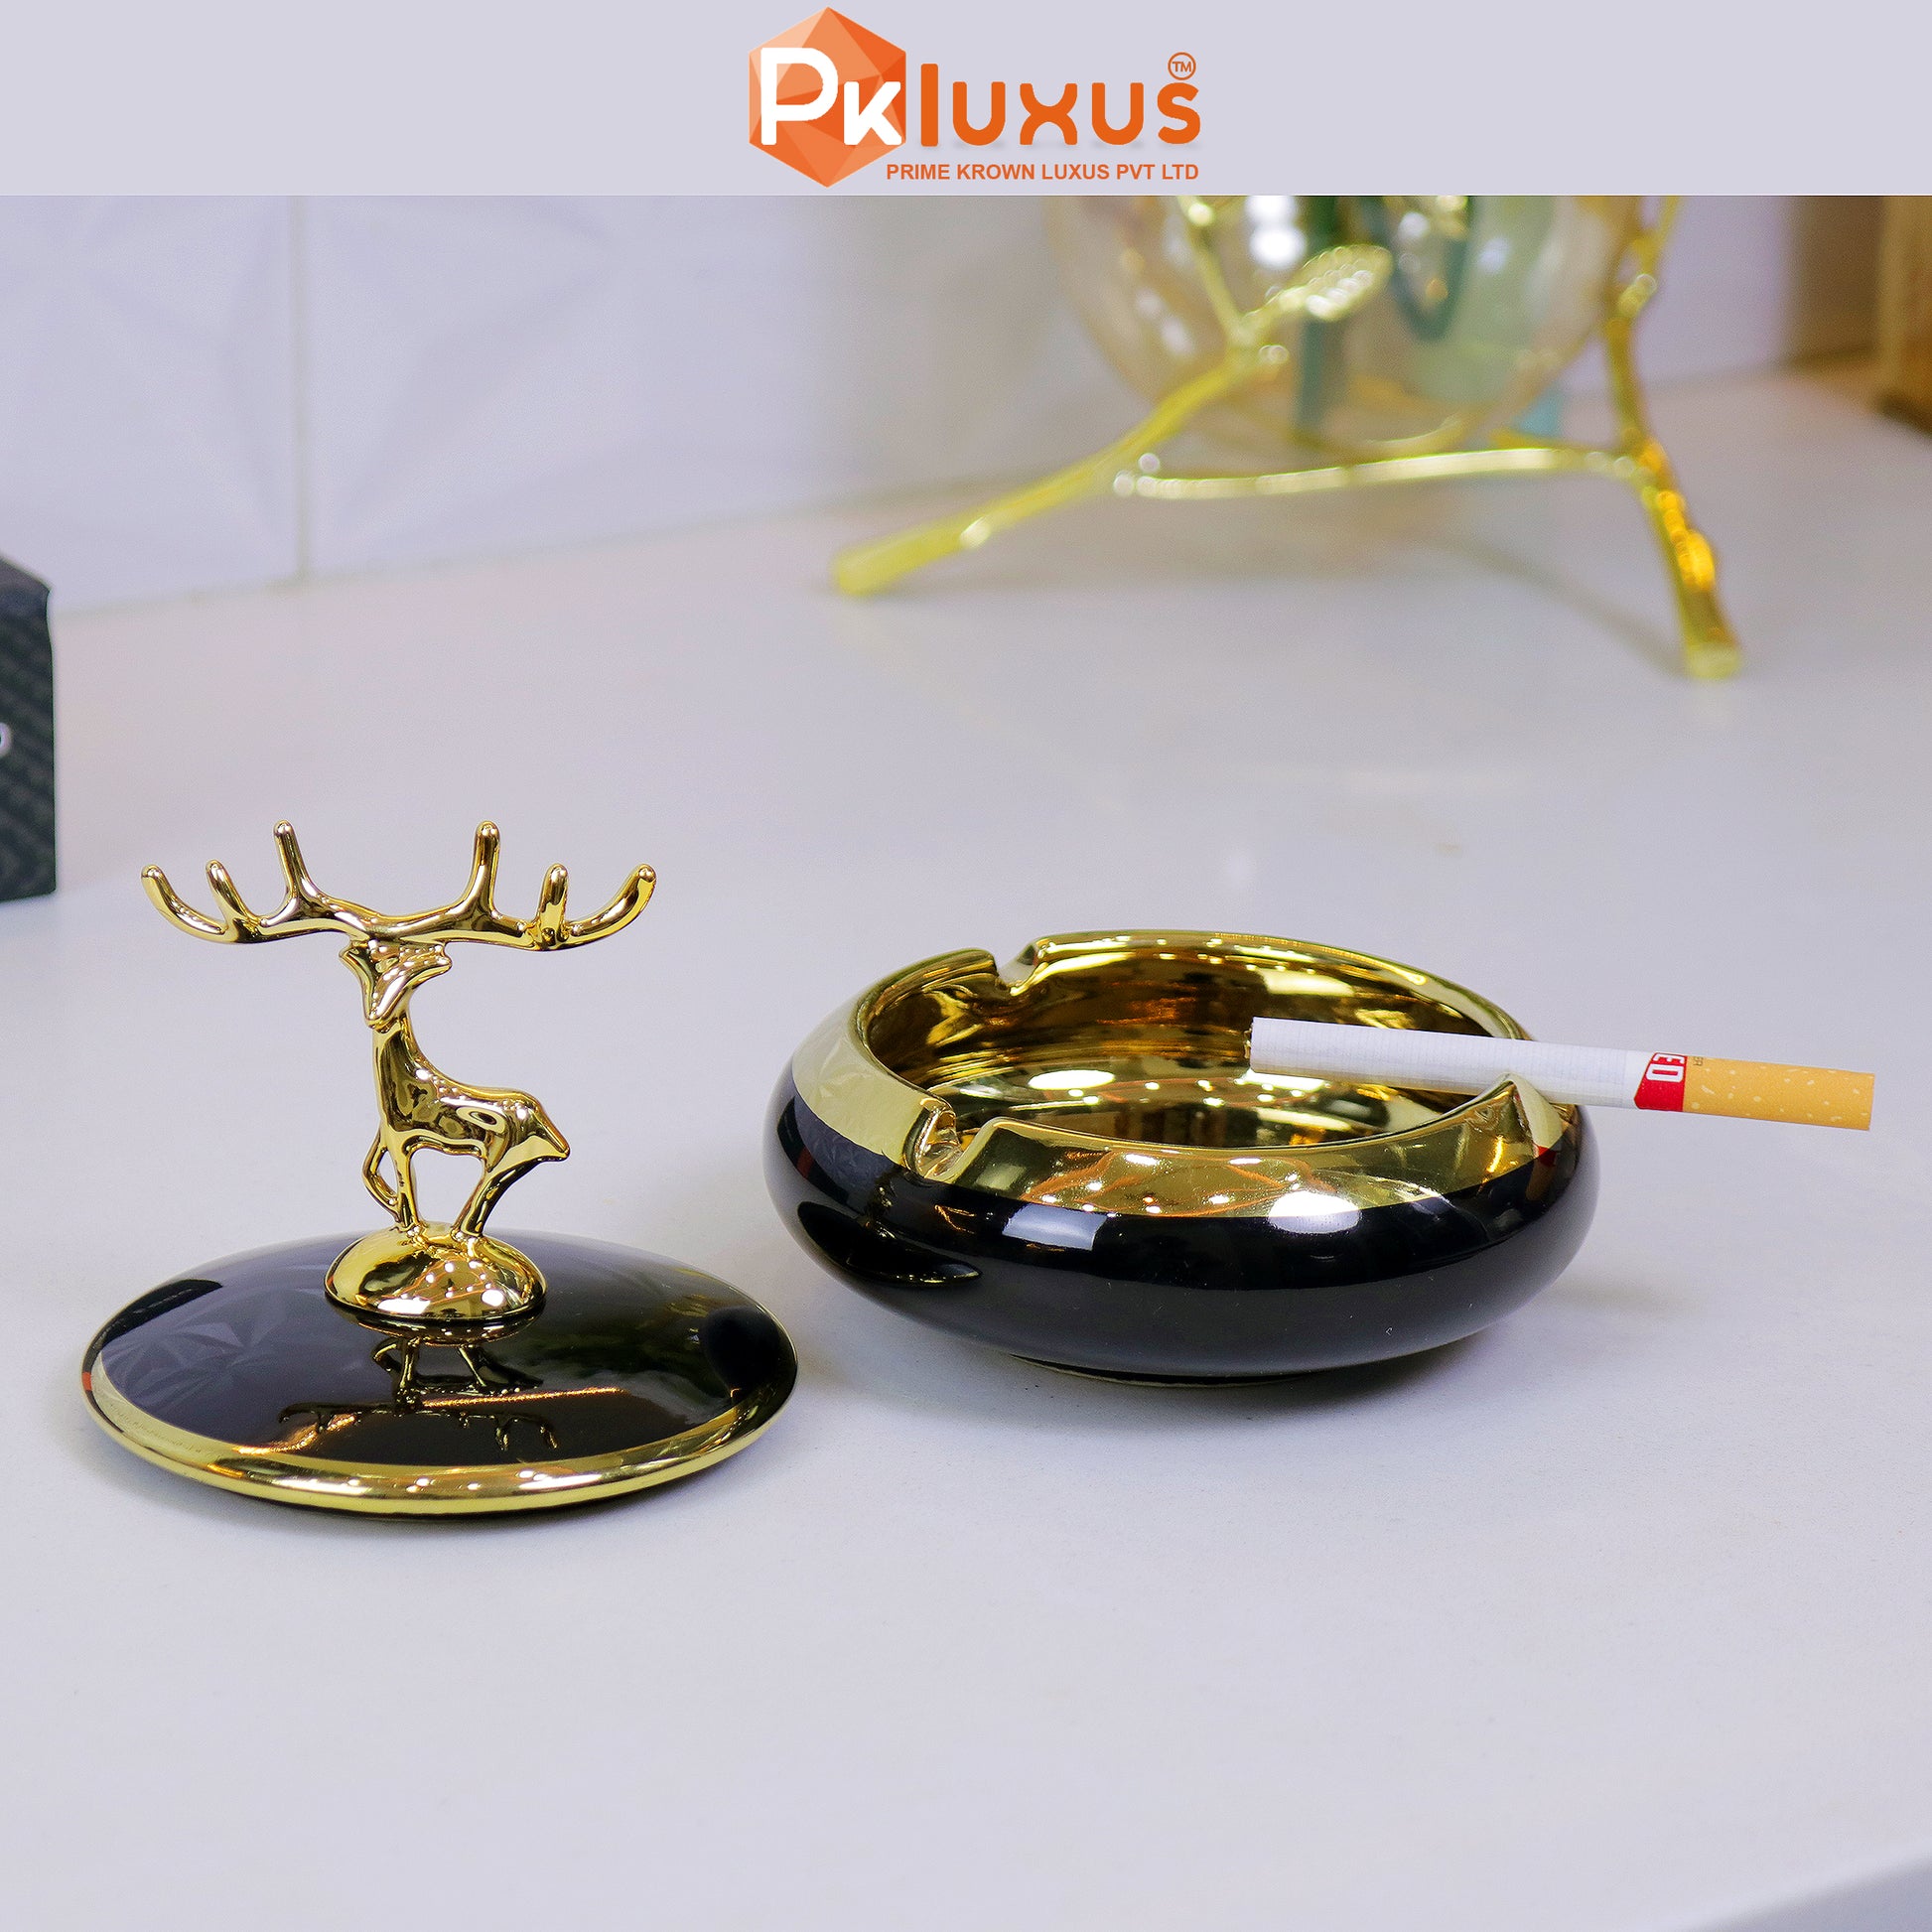 Luxury Black & Golden Deer Ashtray With Lid By PK LUXUS™ - PK LUXUS